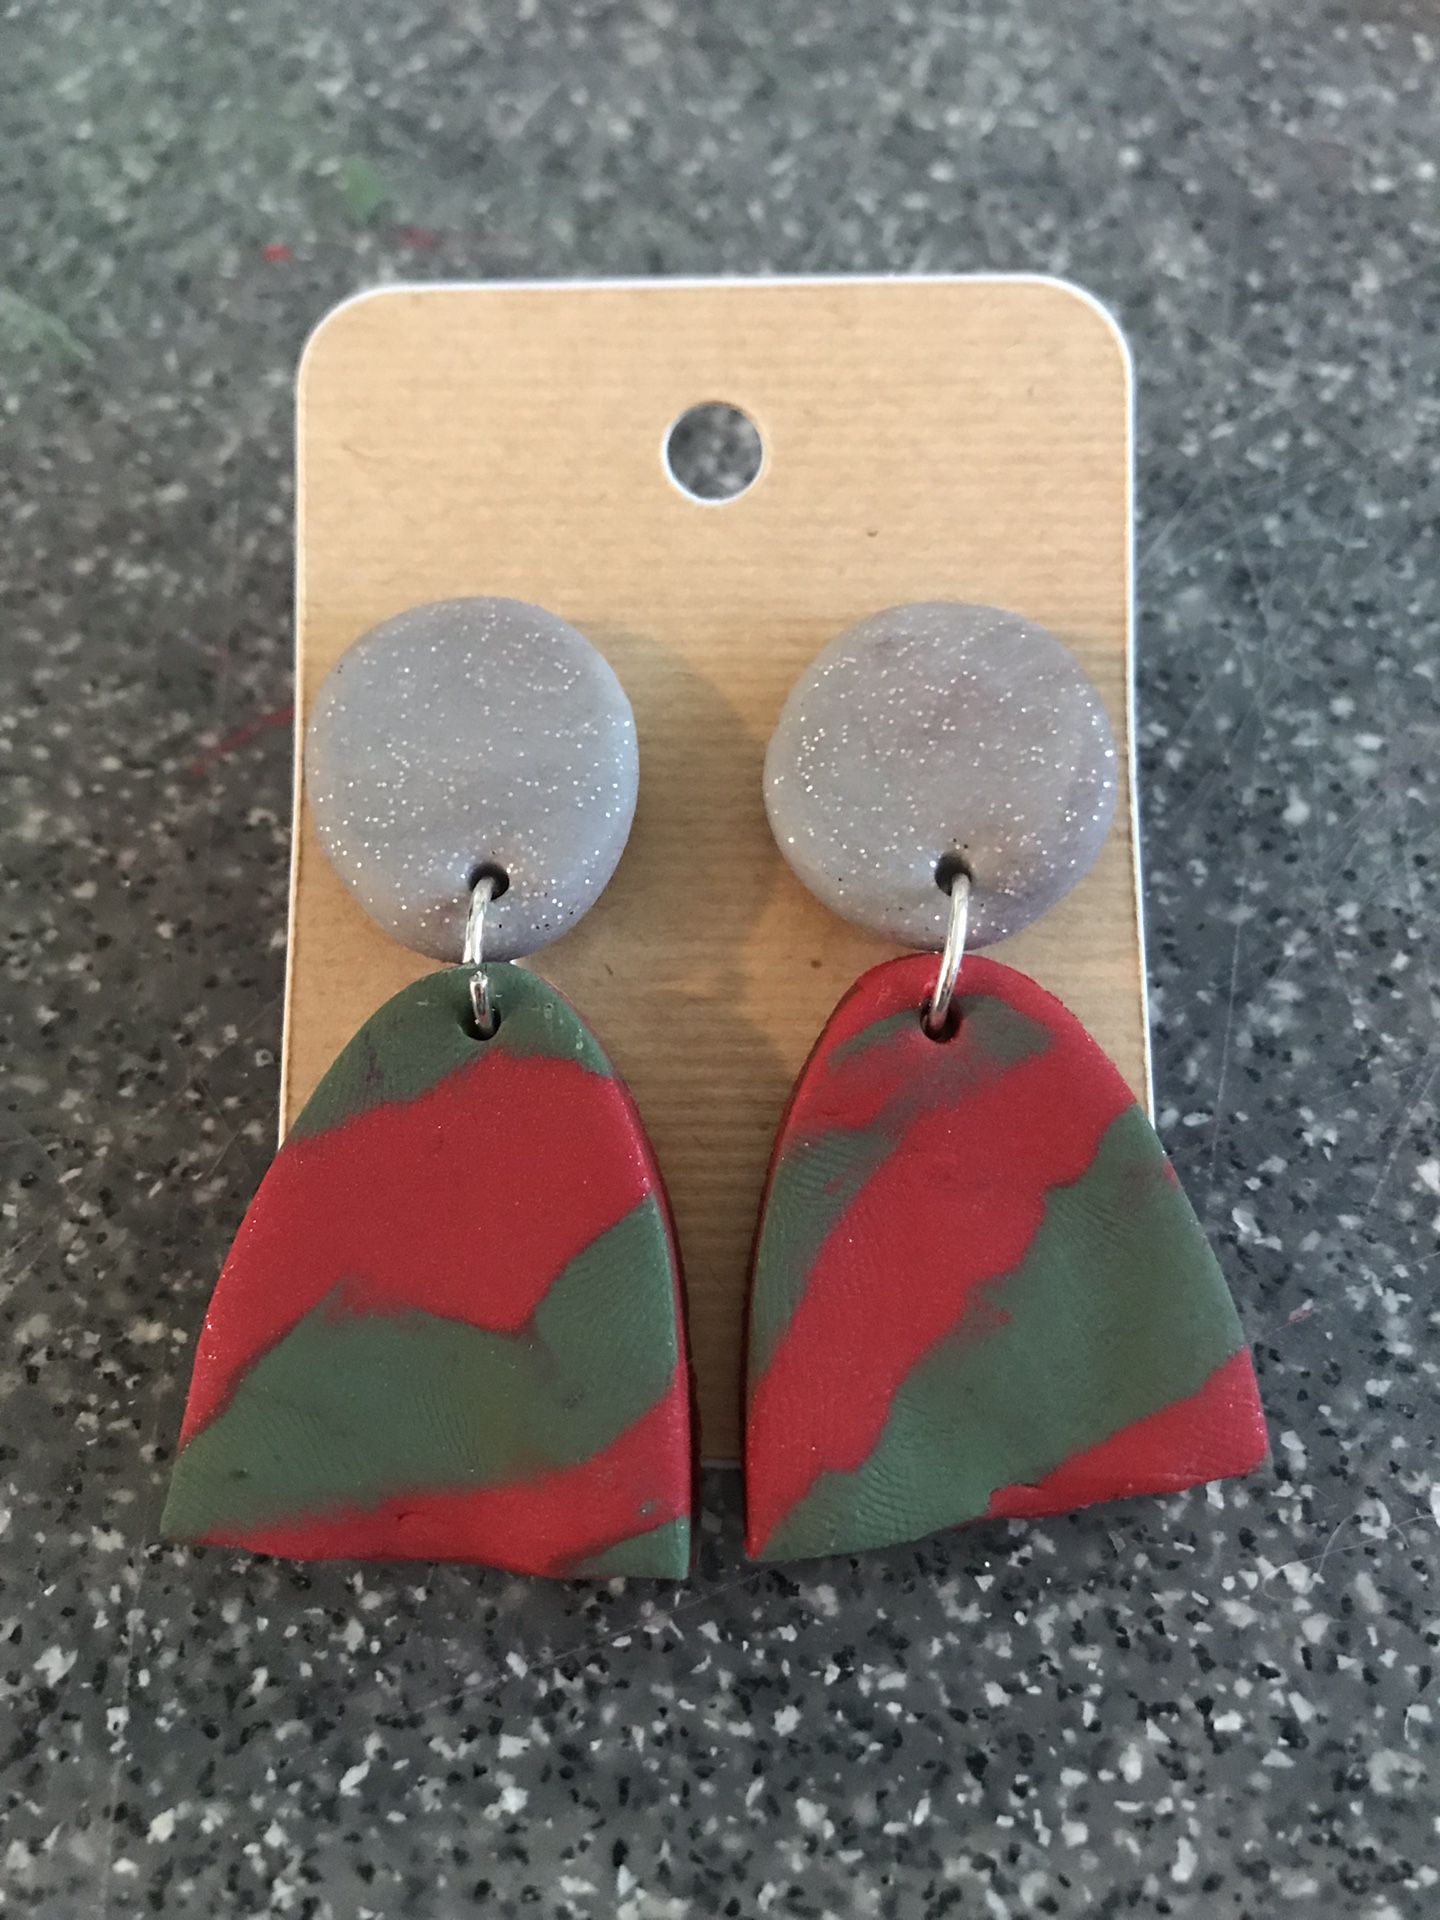 Handmade Clay earrings